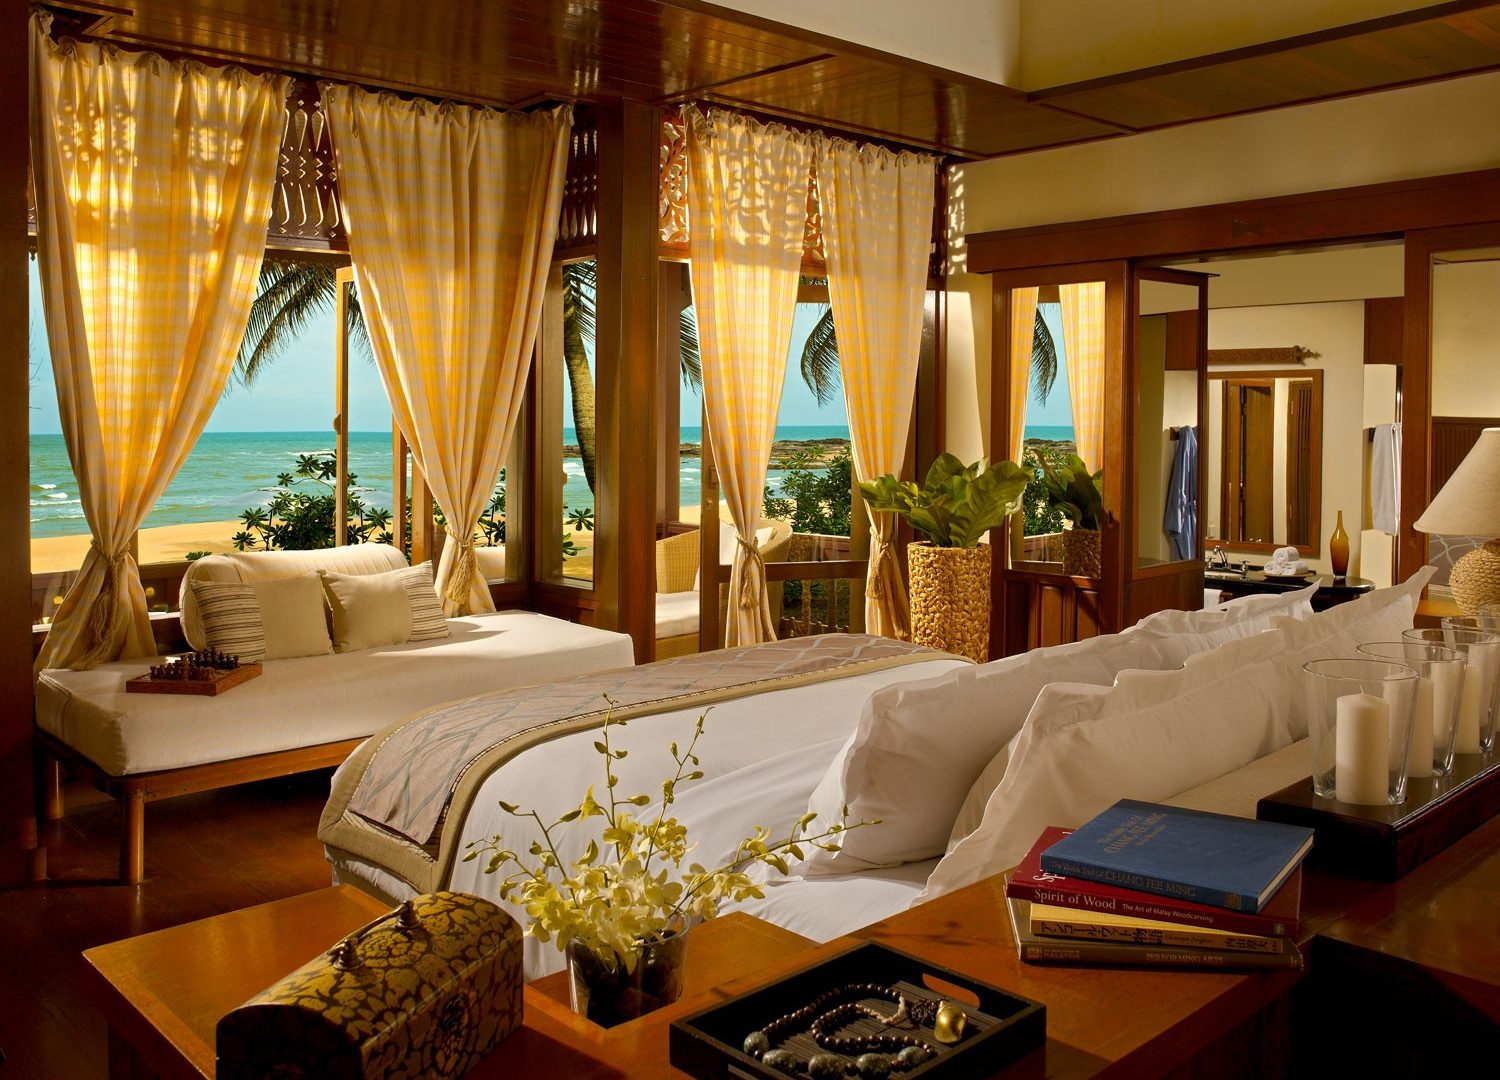 General 1500x1080 Malaysia hotel room bedroom interior interior design beach ocean view bed